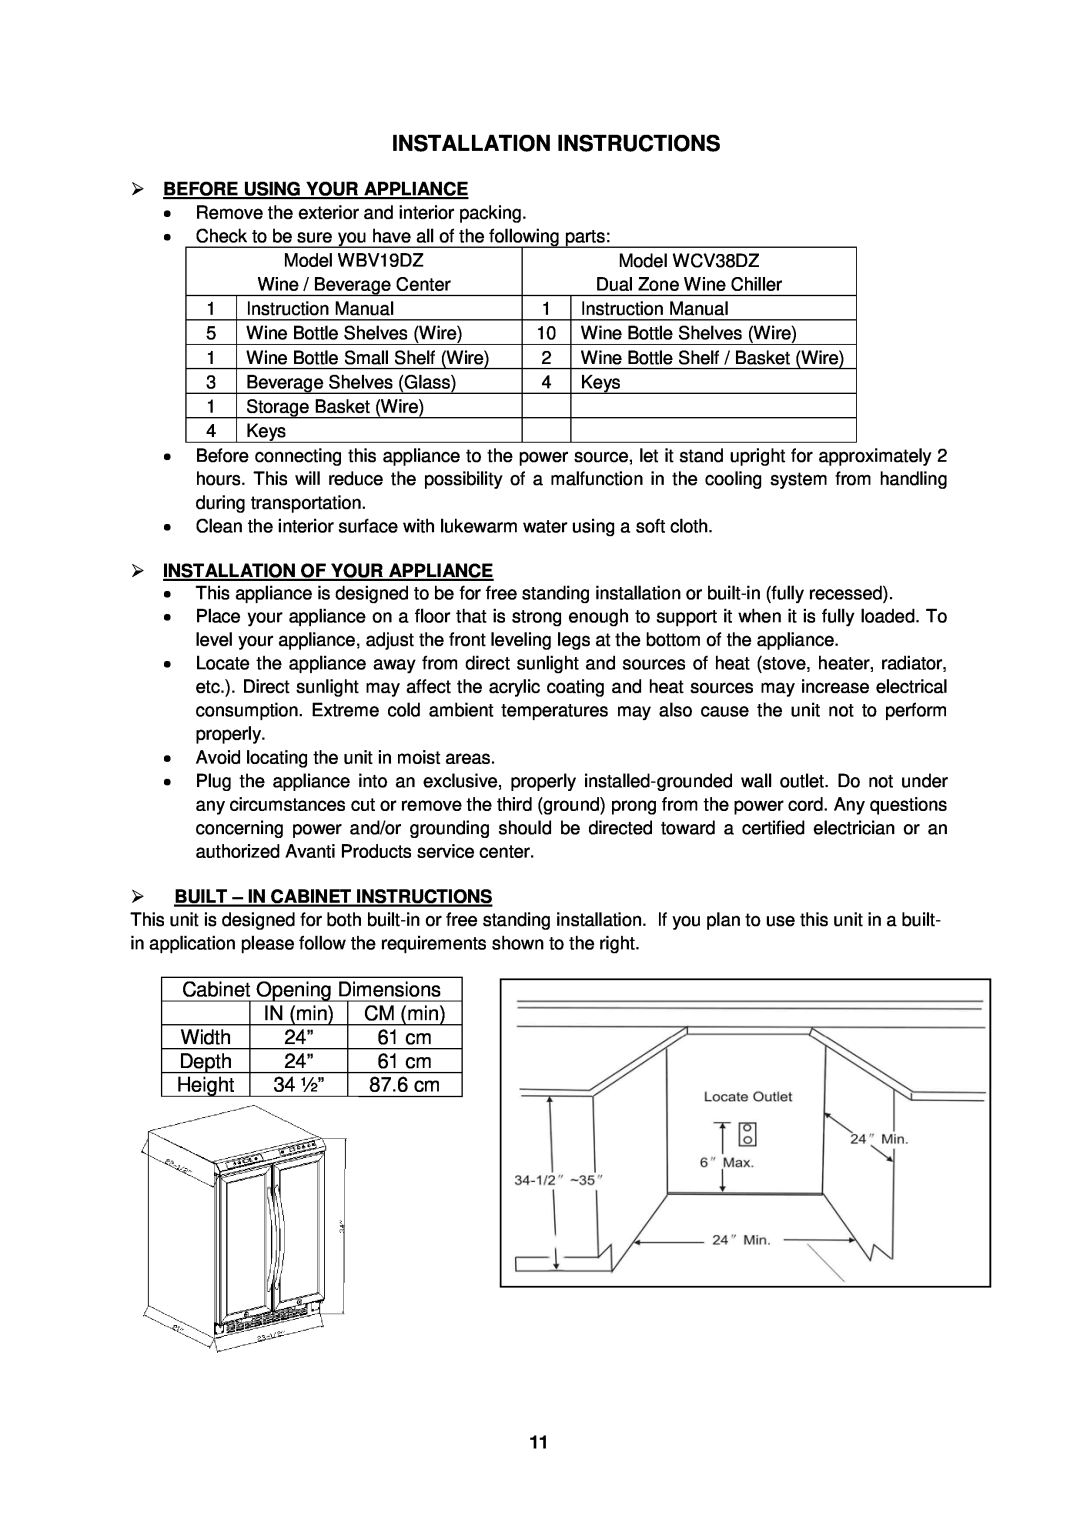 Avanti WCV38DZ, WBV19DZ instruction manual Installation Instructions, Width, 61 cm, 87.6 cm,  Before Using Your Appliance 